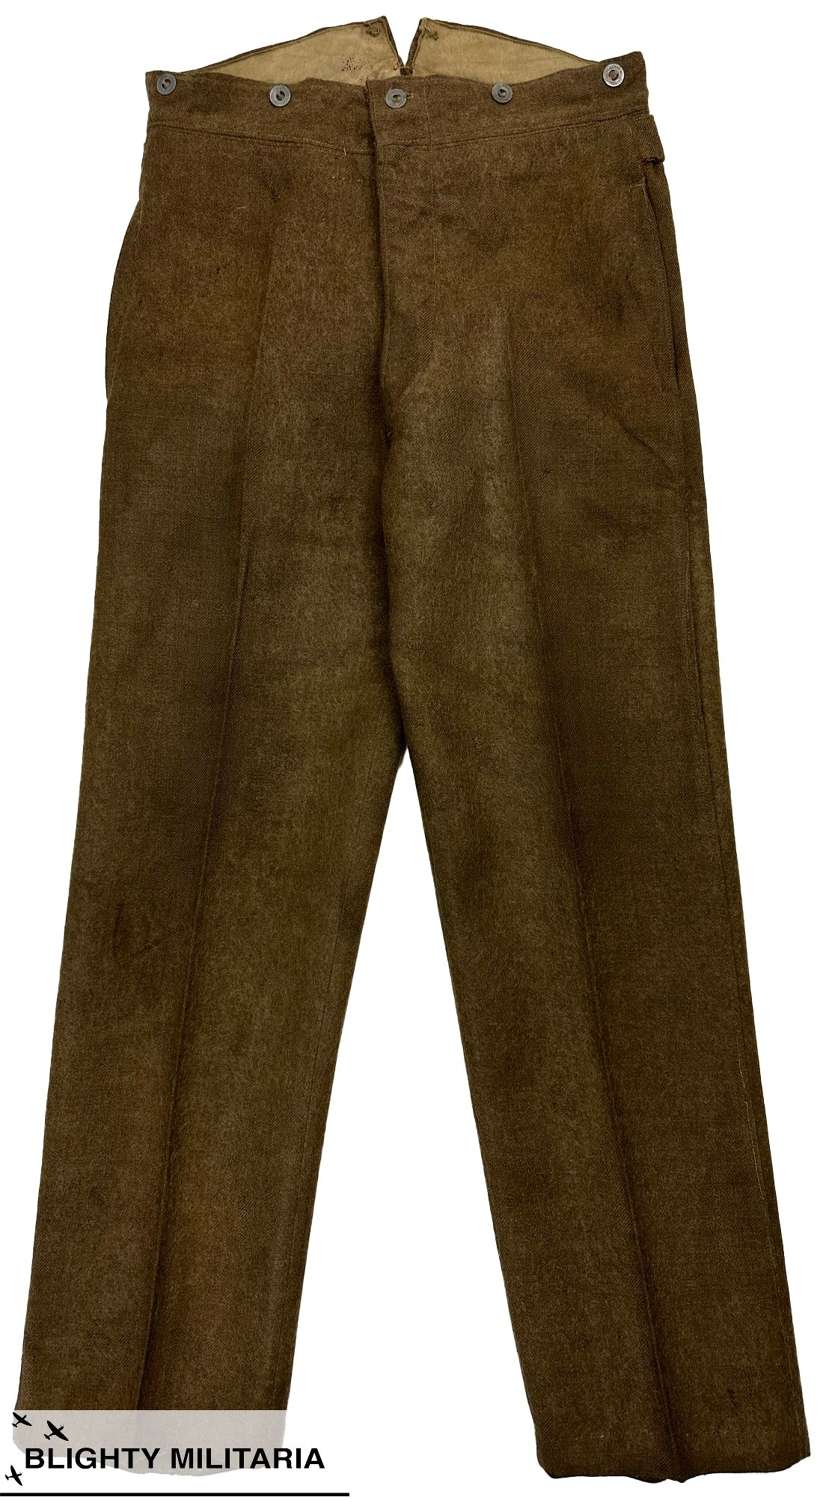 Scarce Original 1920s French Army Demob Trousers - Size 32 x 30